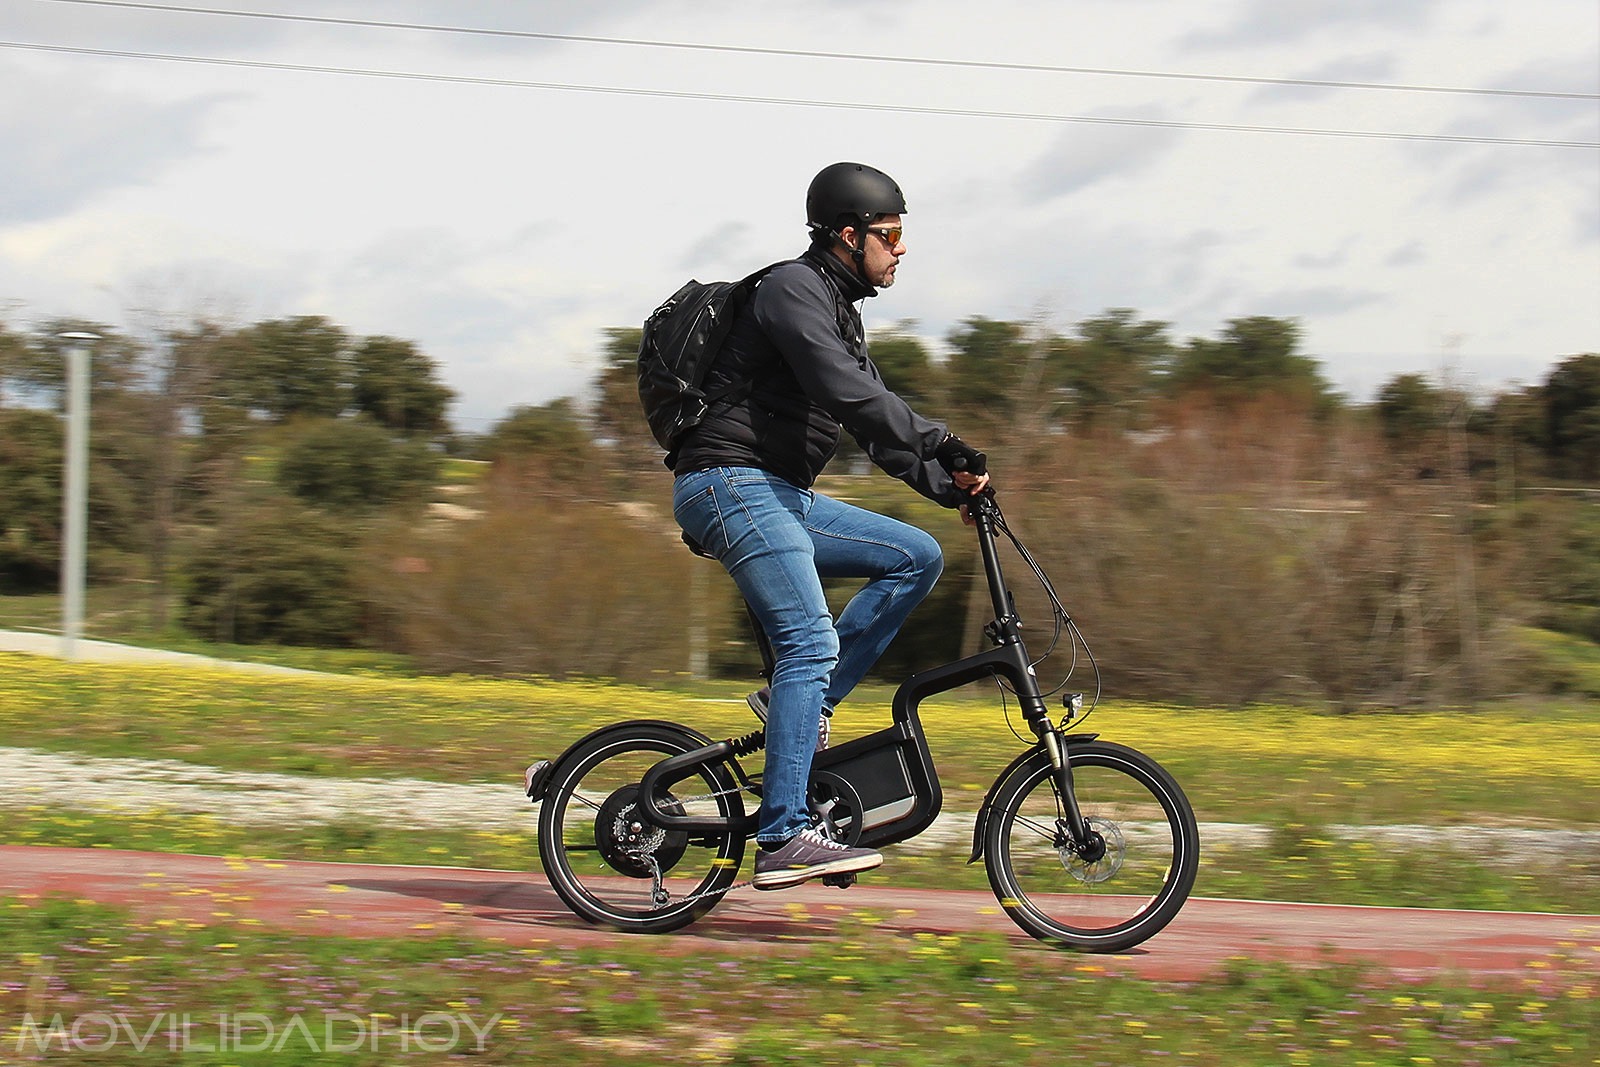 Prueba bicicletas Kymco e-bikes, modelo Q